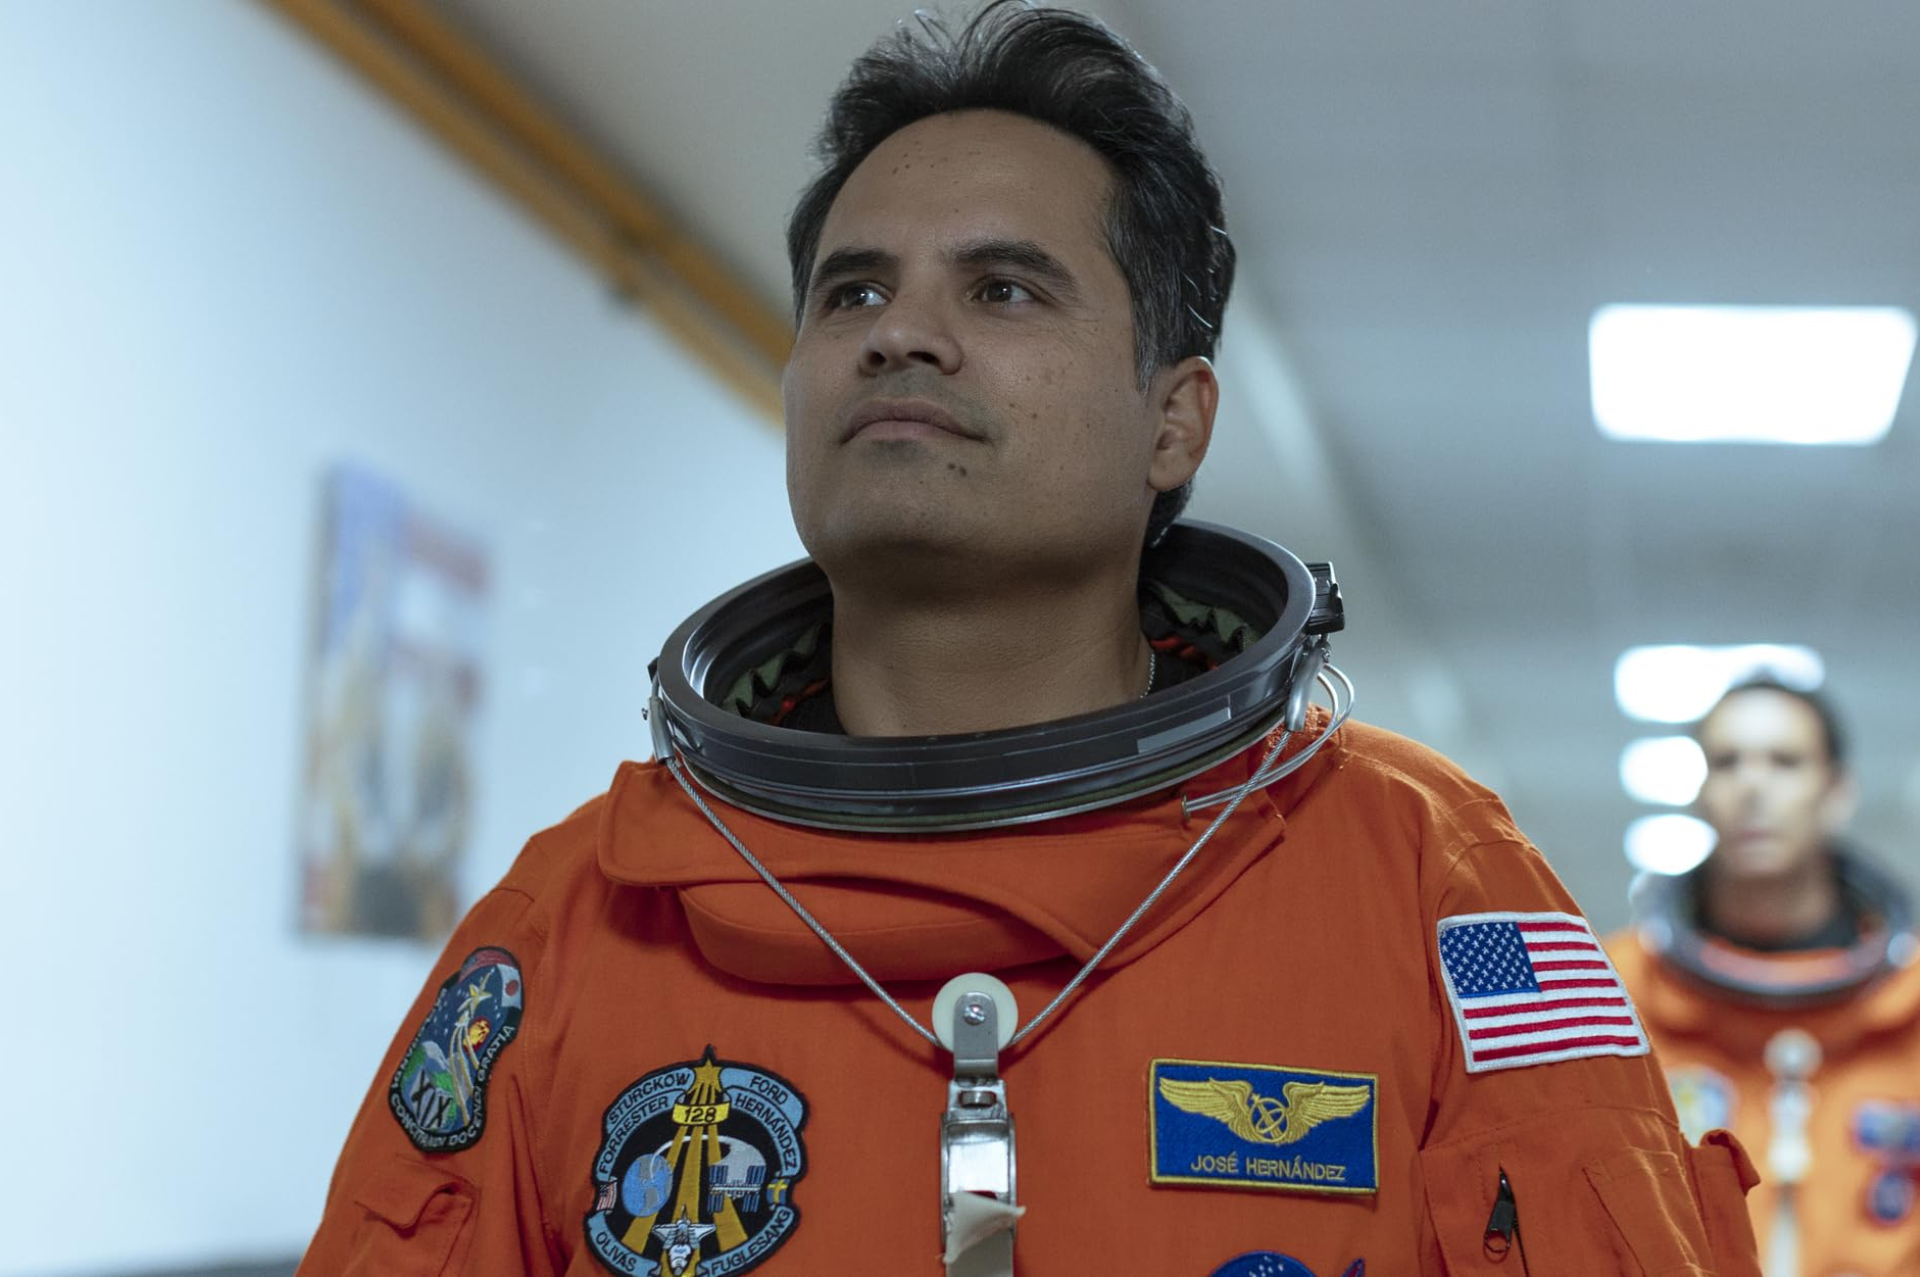 José Hernández: De campesino a astronauta, la inspiradora historia detrás de 'A Million Miles Away